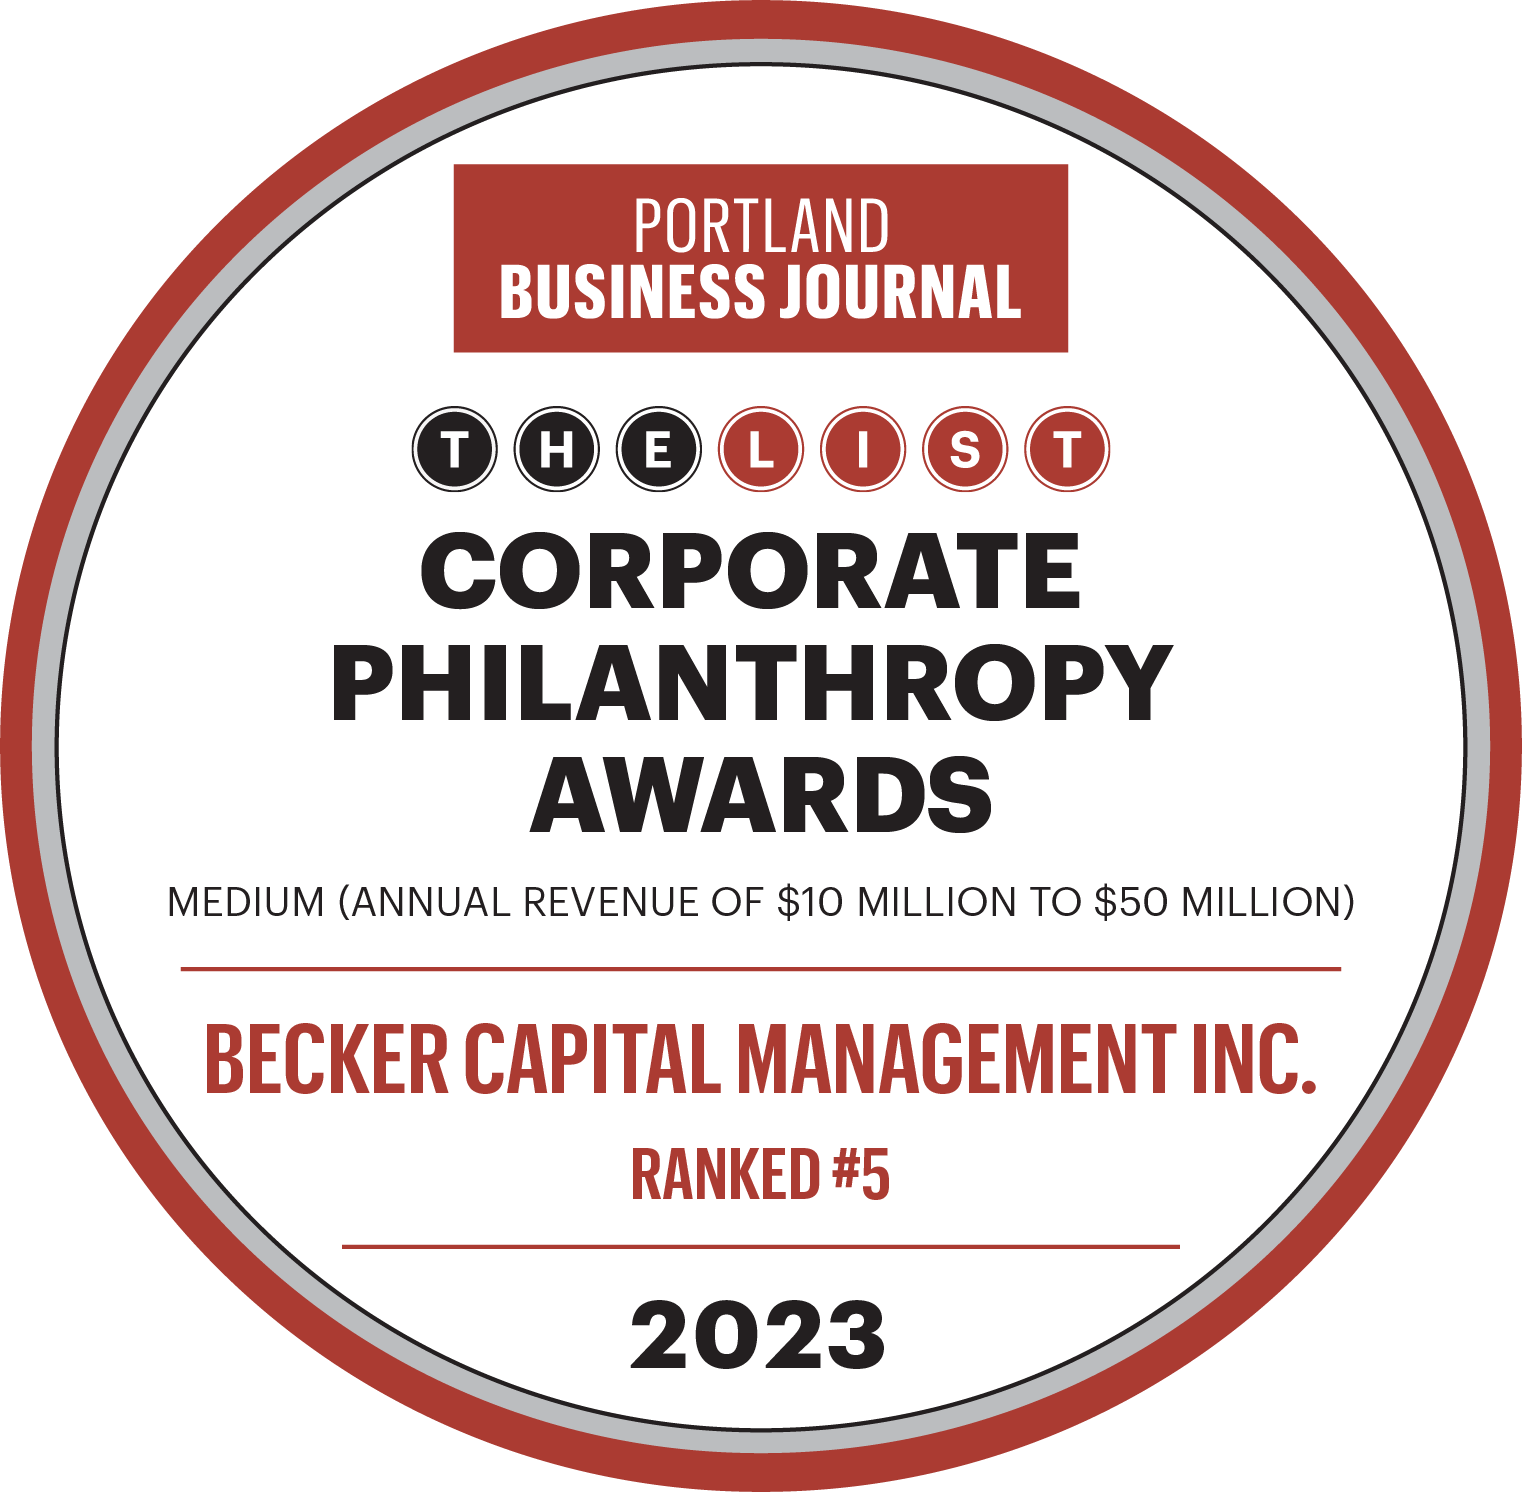 Corporate Philanthropy Awards - Becker Capital Management Inc. 20203